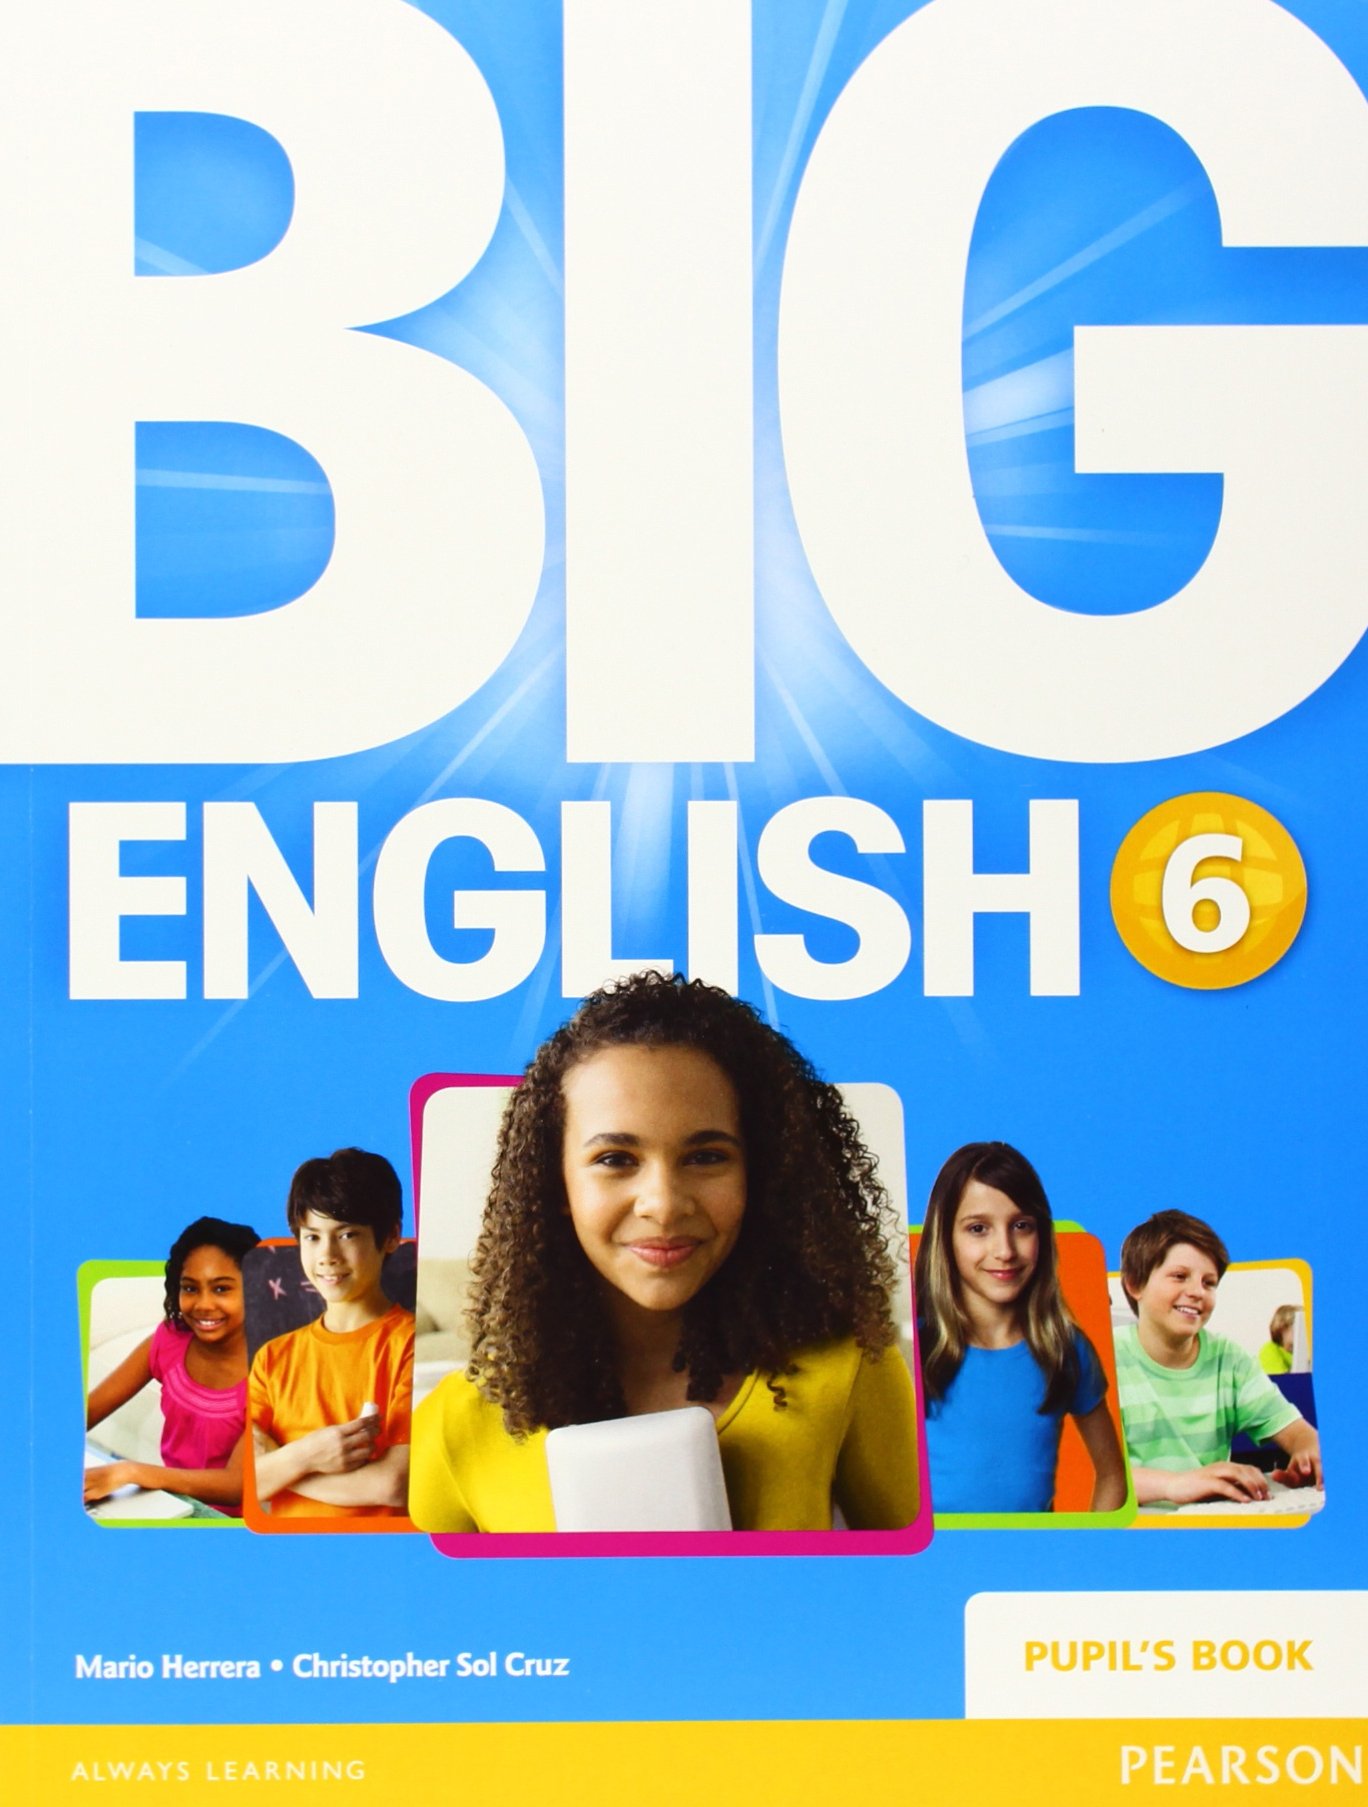 BIG ENGLISH 6 Pupil's Book